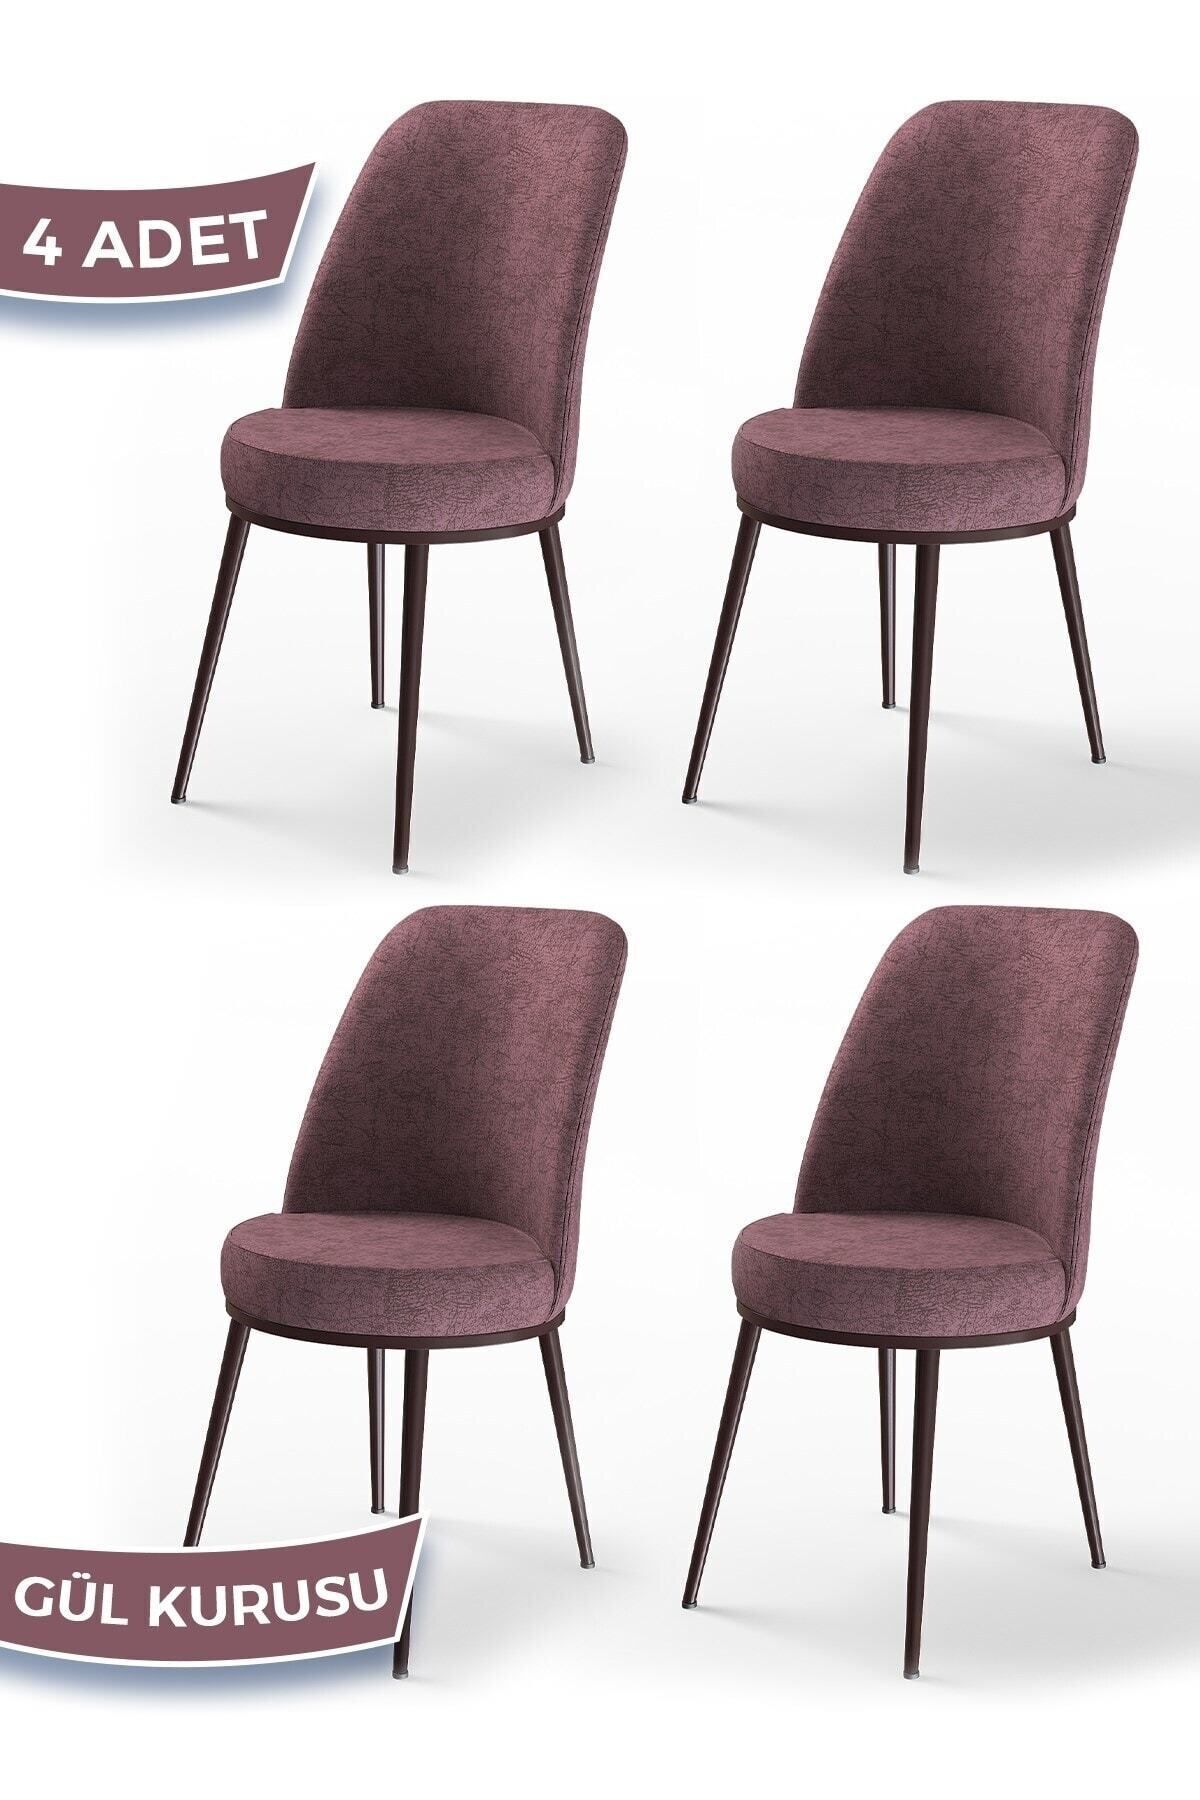 Canisa Concept Dexa Serisi, Üst Kalite Mutfak Sandalyesi, Metal Kahverengi Iskeletli, 4 Adet Gülkurusu Sandalye